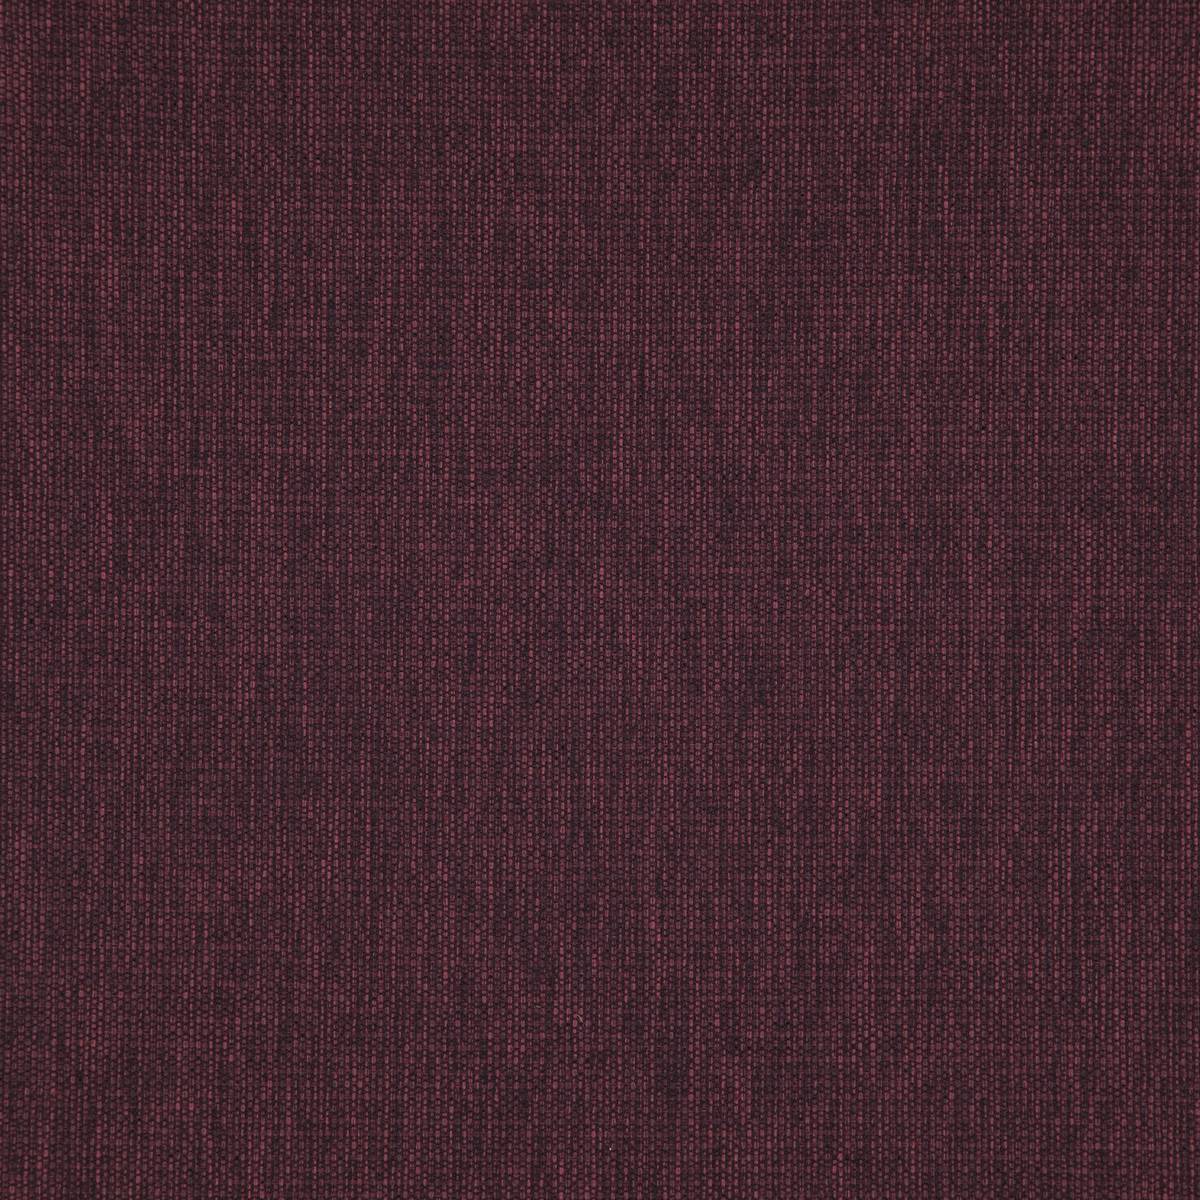 Penzance Mulberry Fabric by Prestigious Textiles